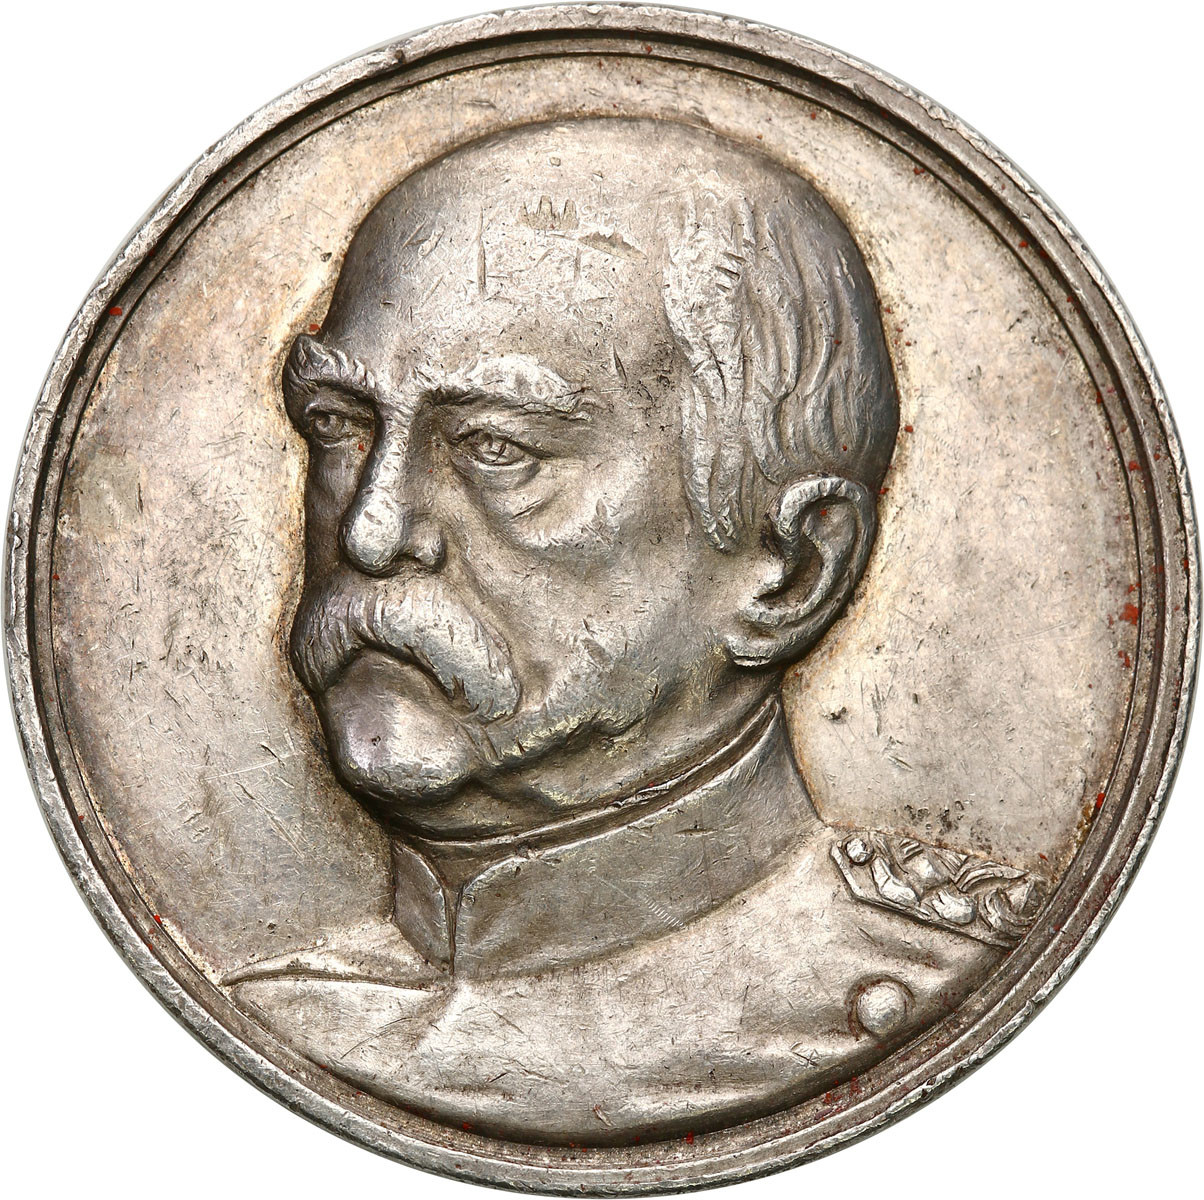 Niemcy. Medal 1895, 80 rocznica urodzin Otto von Bismarcka